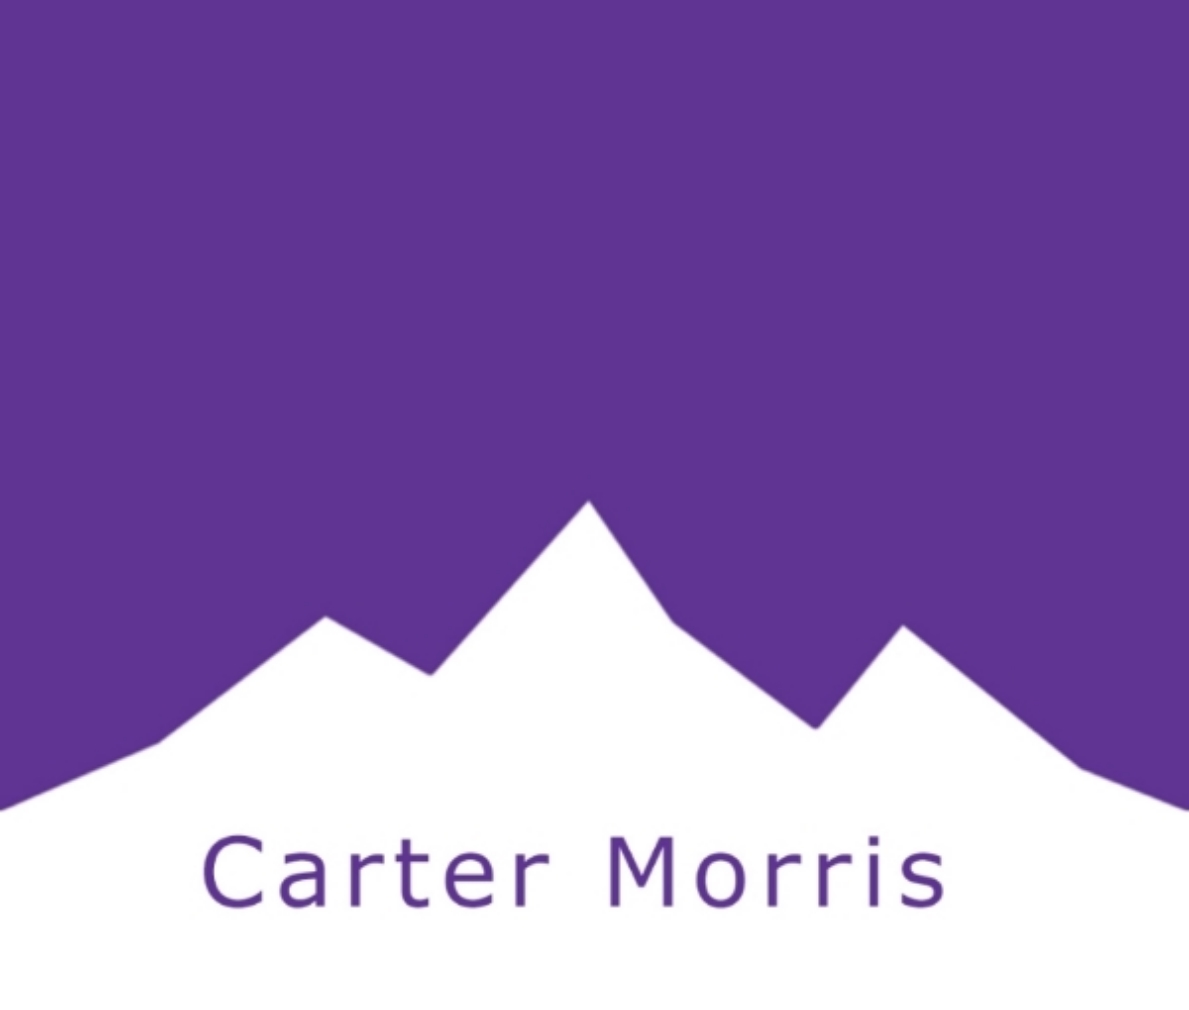 Carter Morris